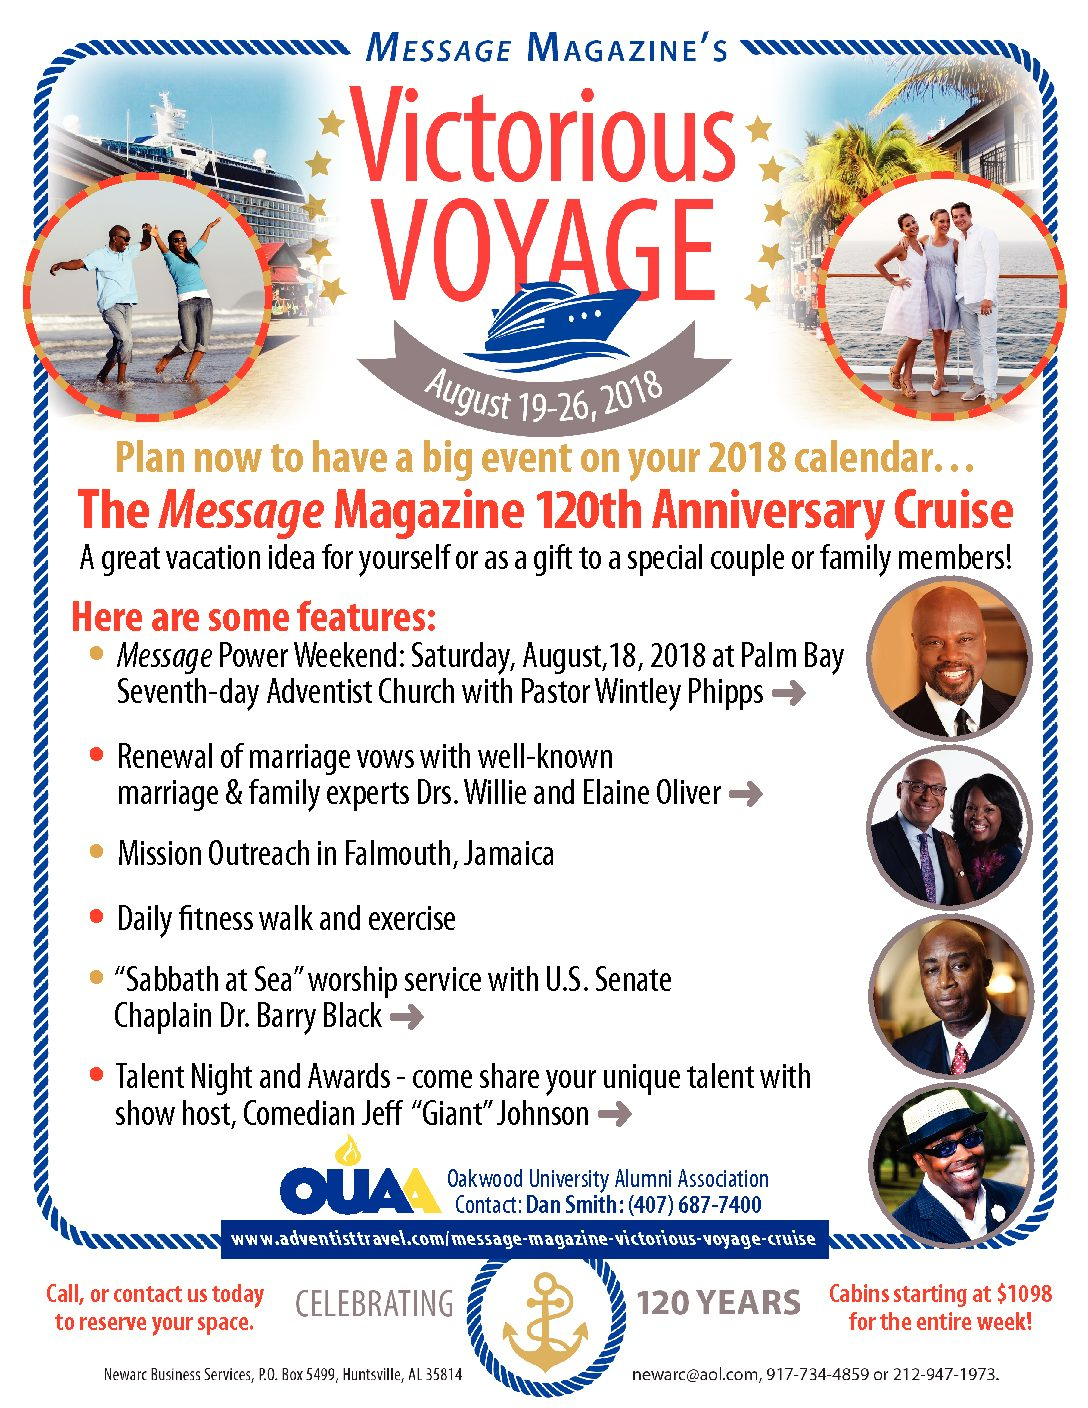 Message Magazine Victorious Voyage Cruise